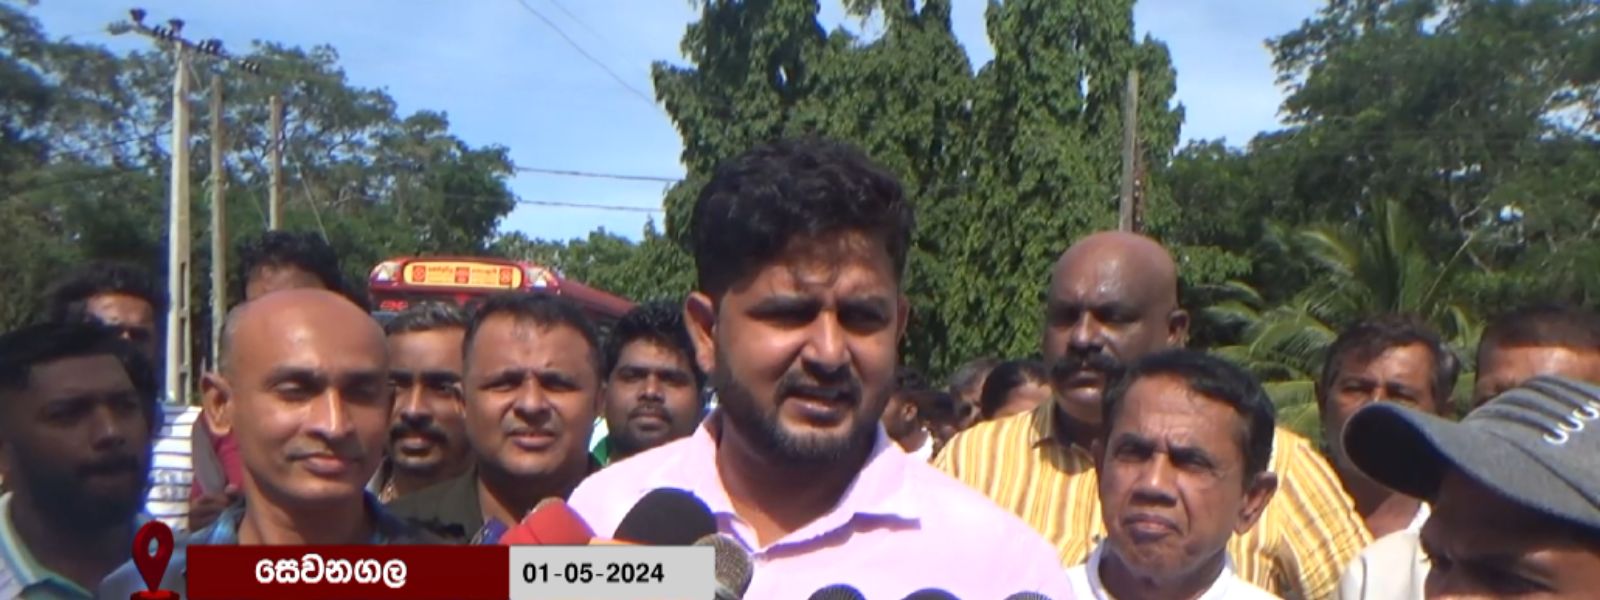 SLPP MP Gayashan Throws Support Behind Ranil